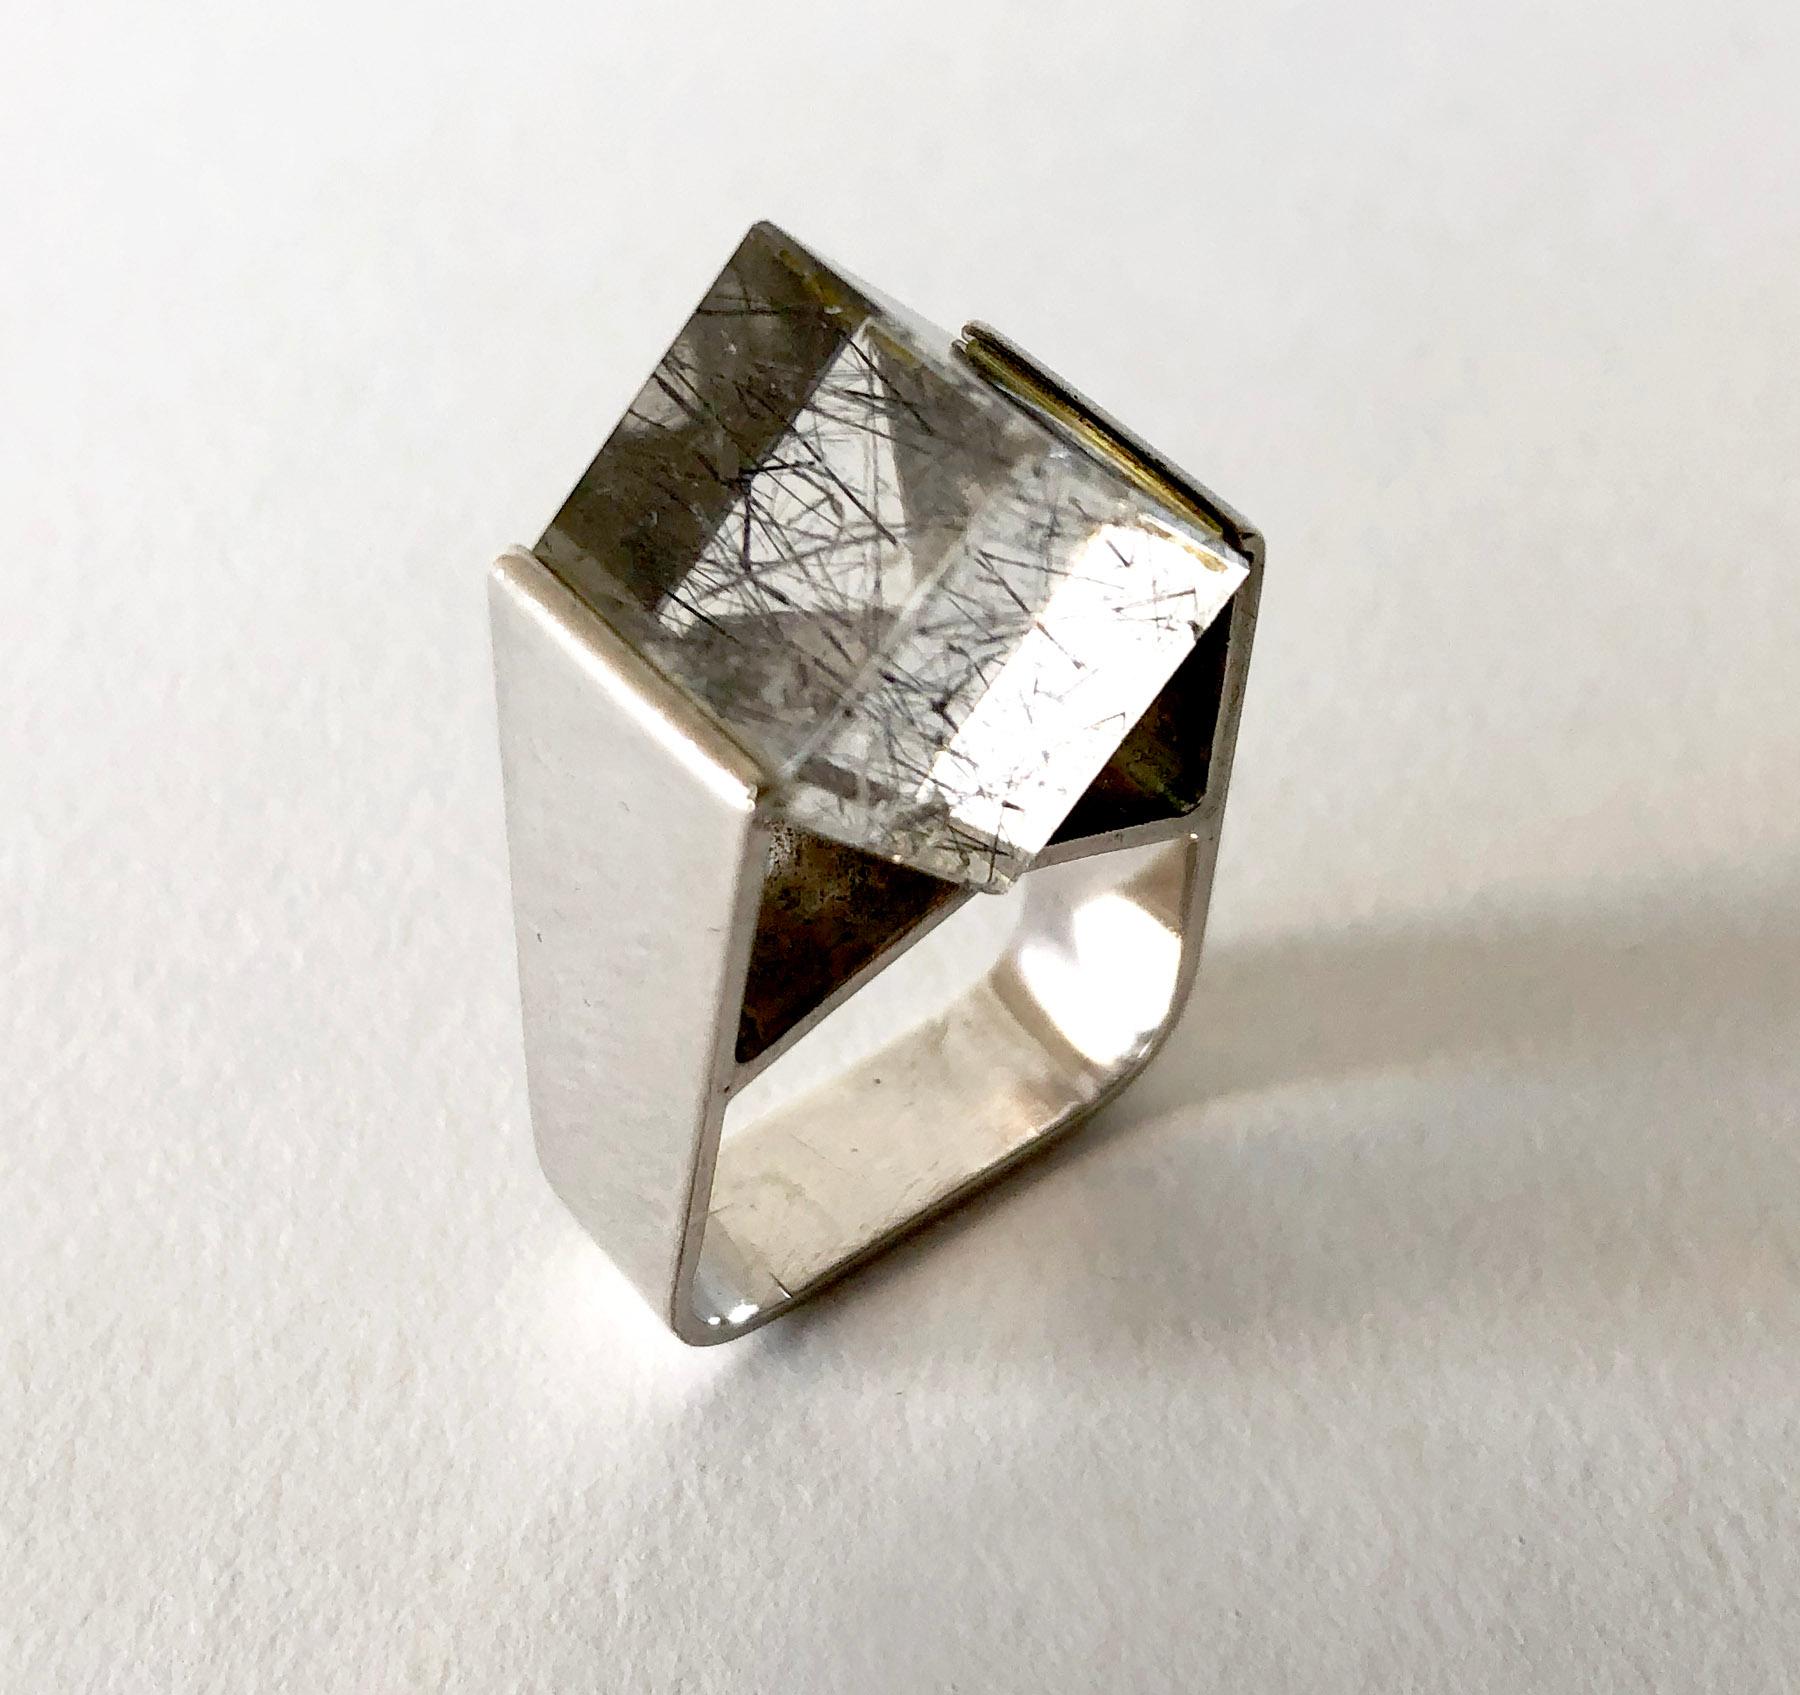 jens ring design silver